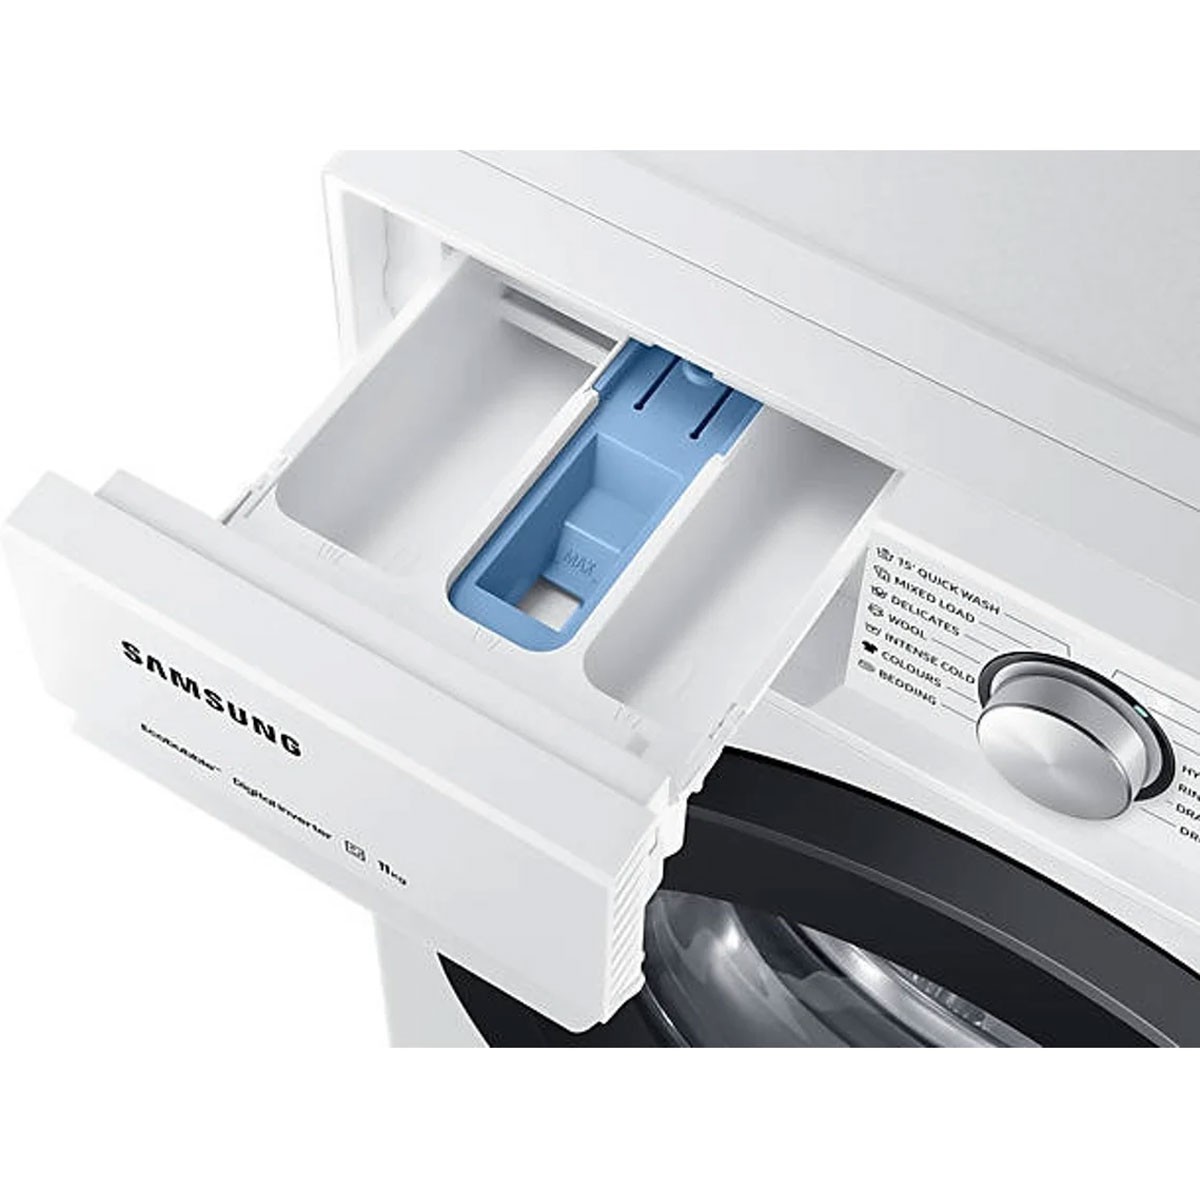 Washing Machine Samsung 11Kg 1400RPM (WW11BBA046AW)